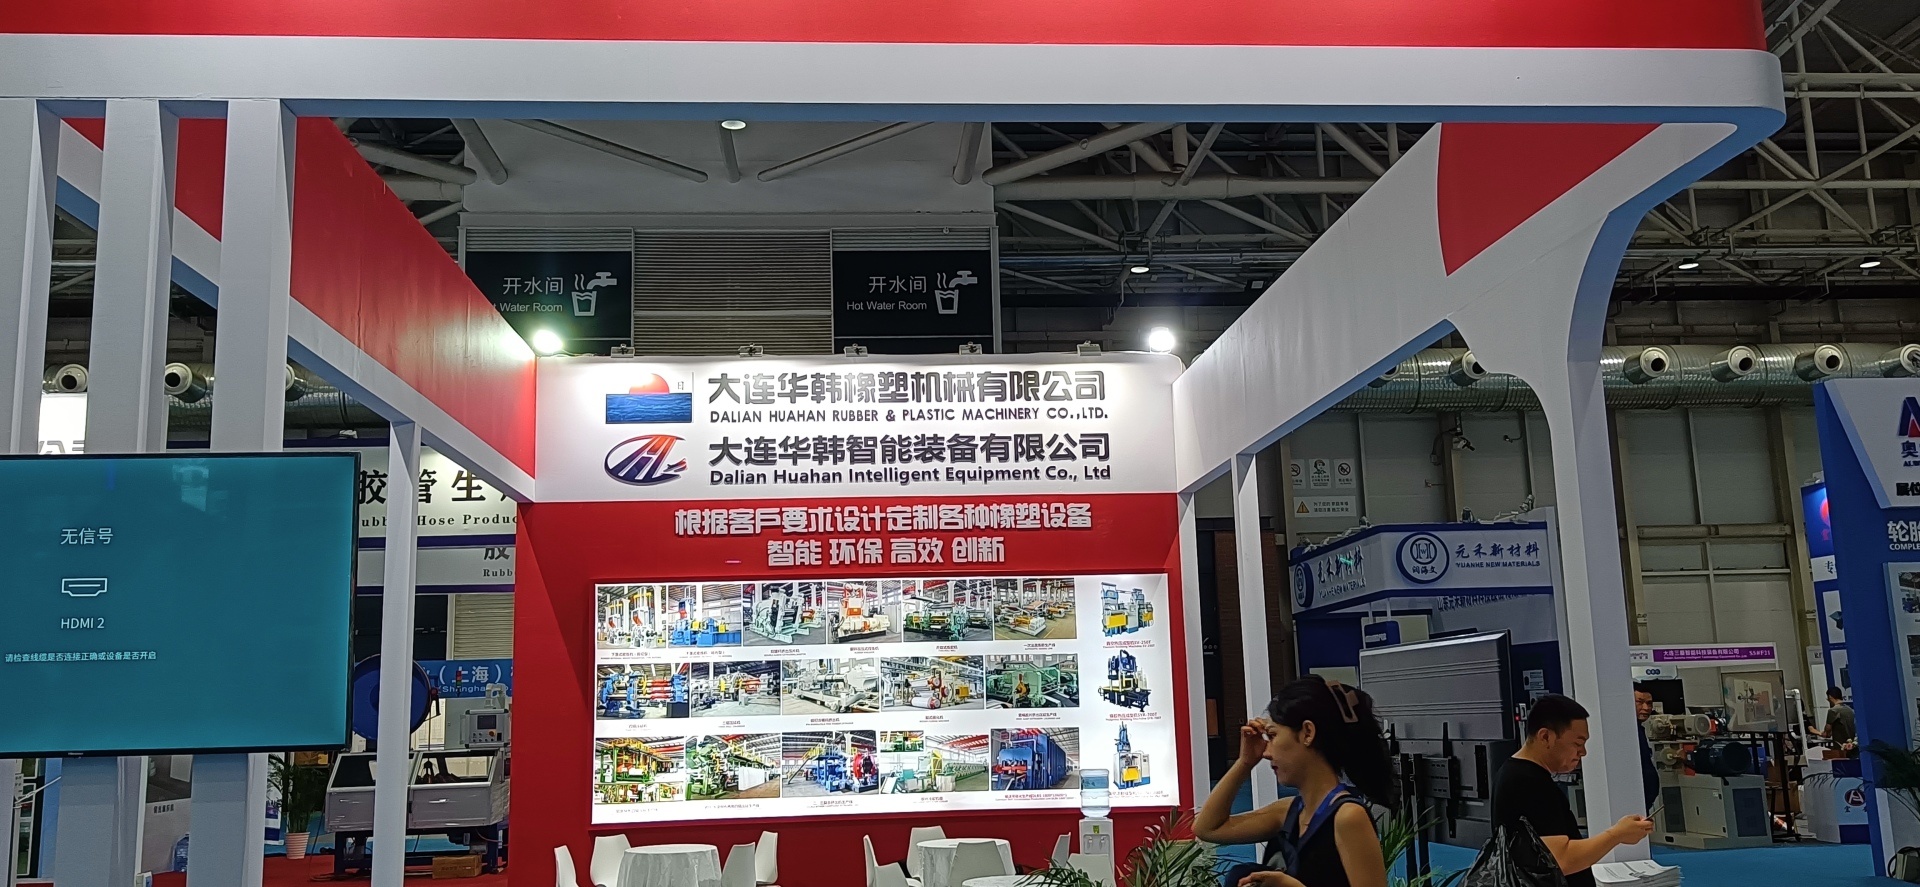 2023.7.18-21 Asia Pacific Rubber & Plastic Exhibition (Qingdao)